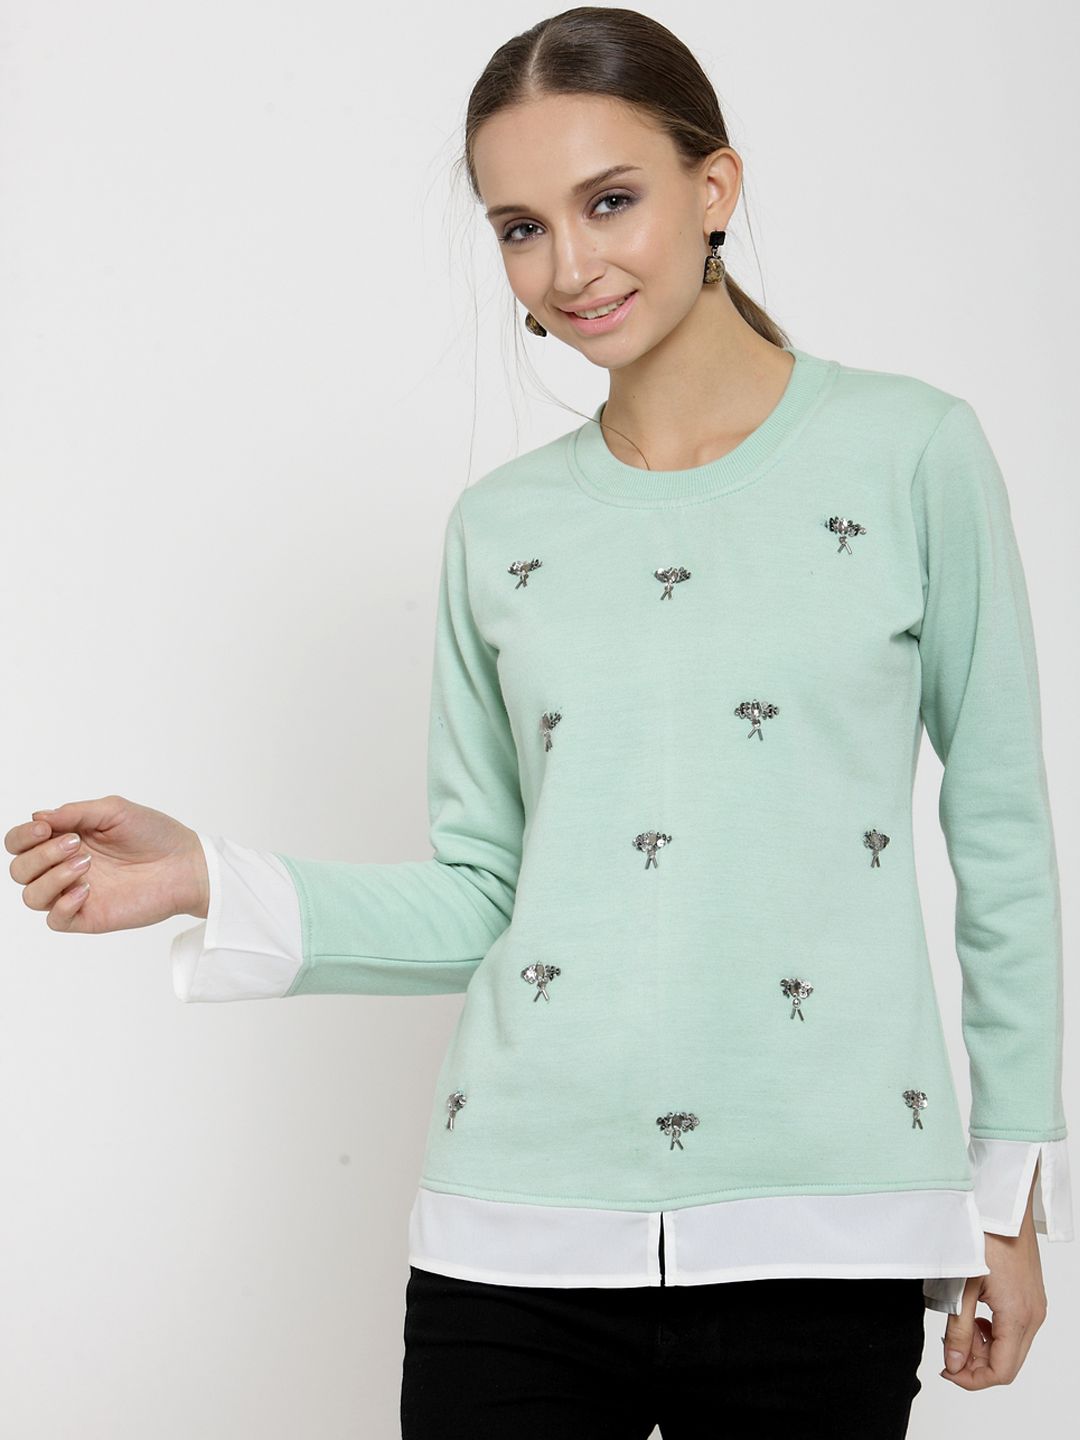 Belle Fille Women Sea Green Solid Sweatshirt Price in India